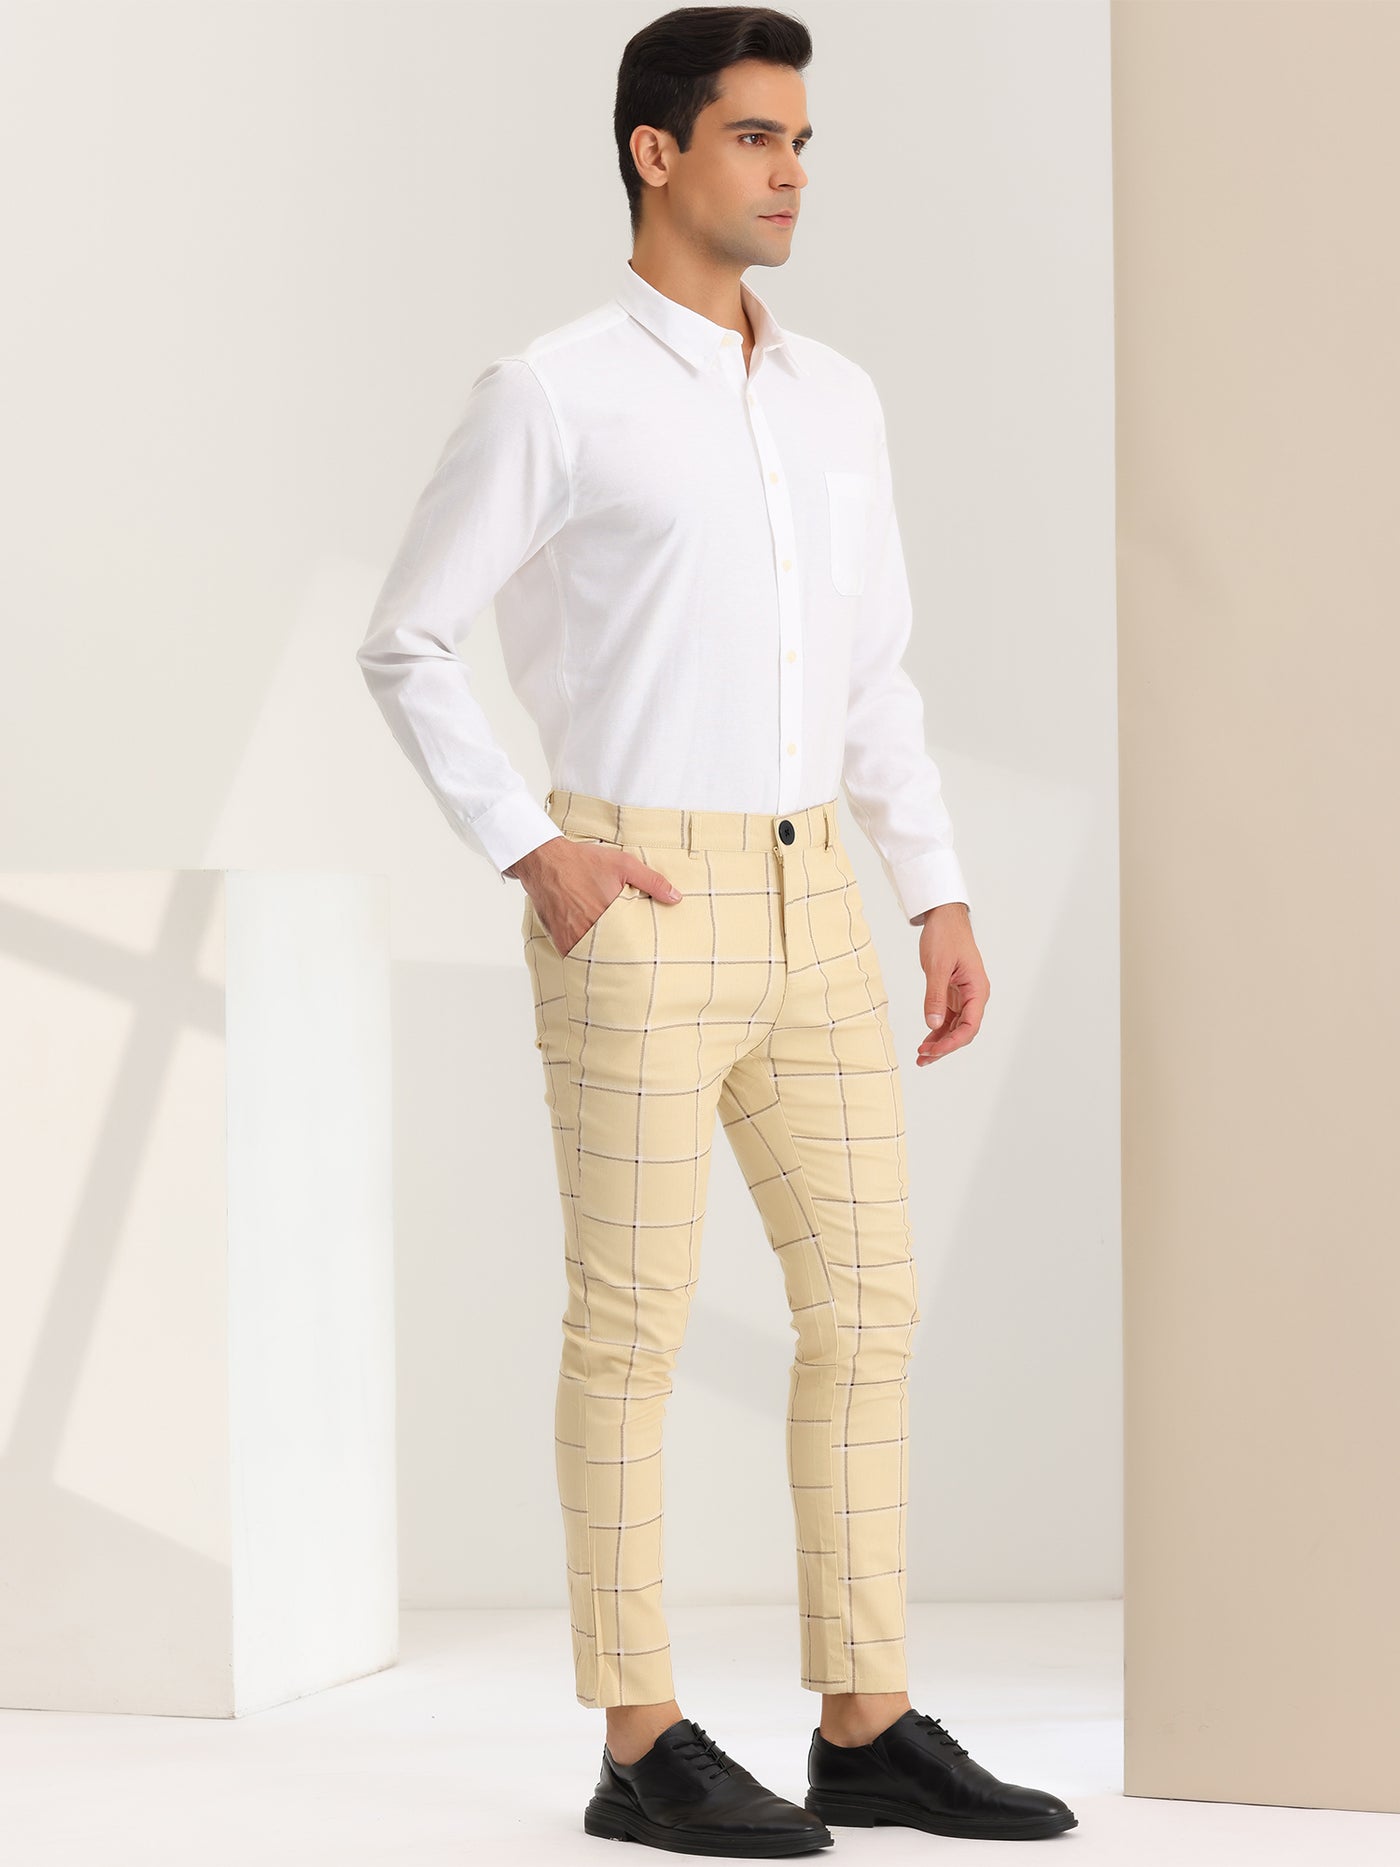 Bublédon Men's Plaid Dress Pants Skinny Fit Flat Front Business Checked Trousers